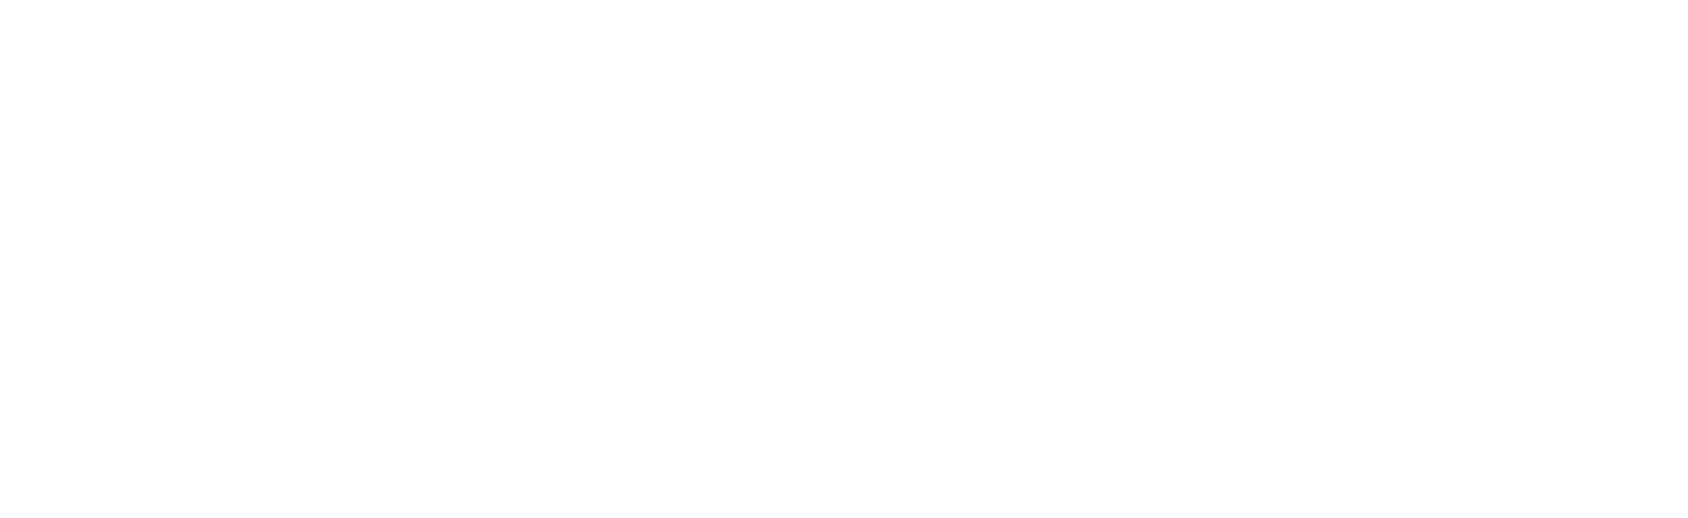 City of Oxford MS logo